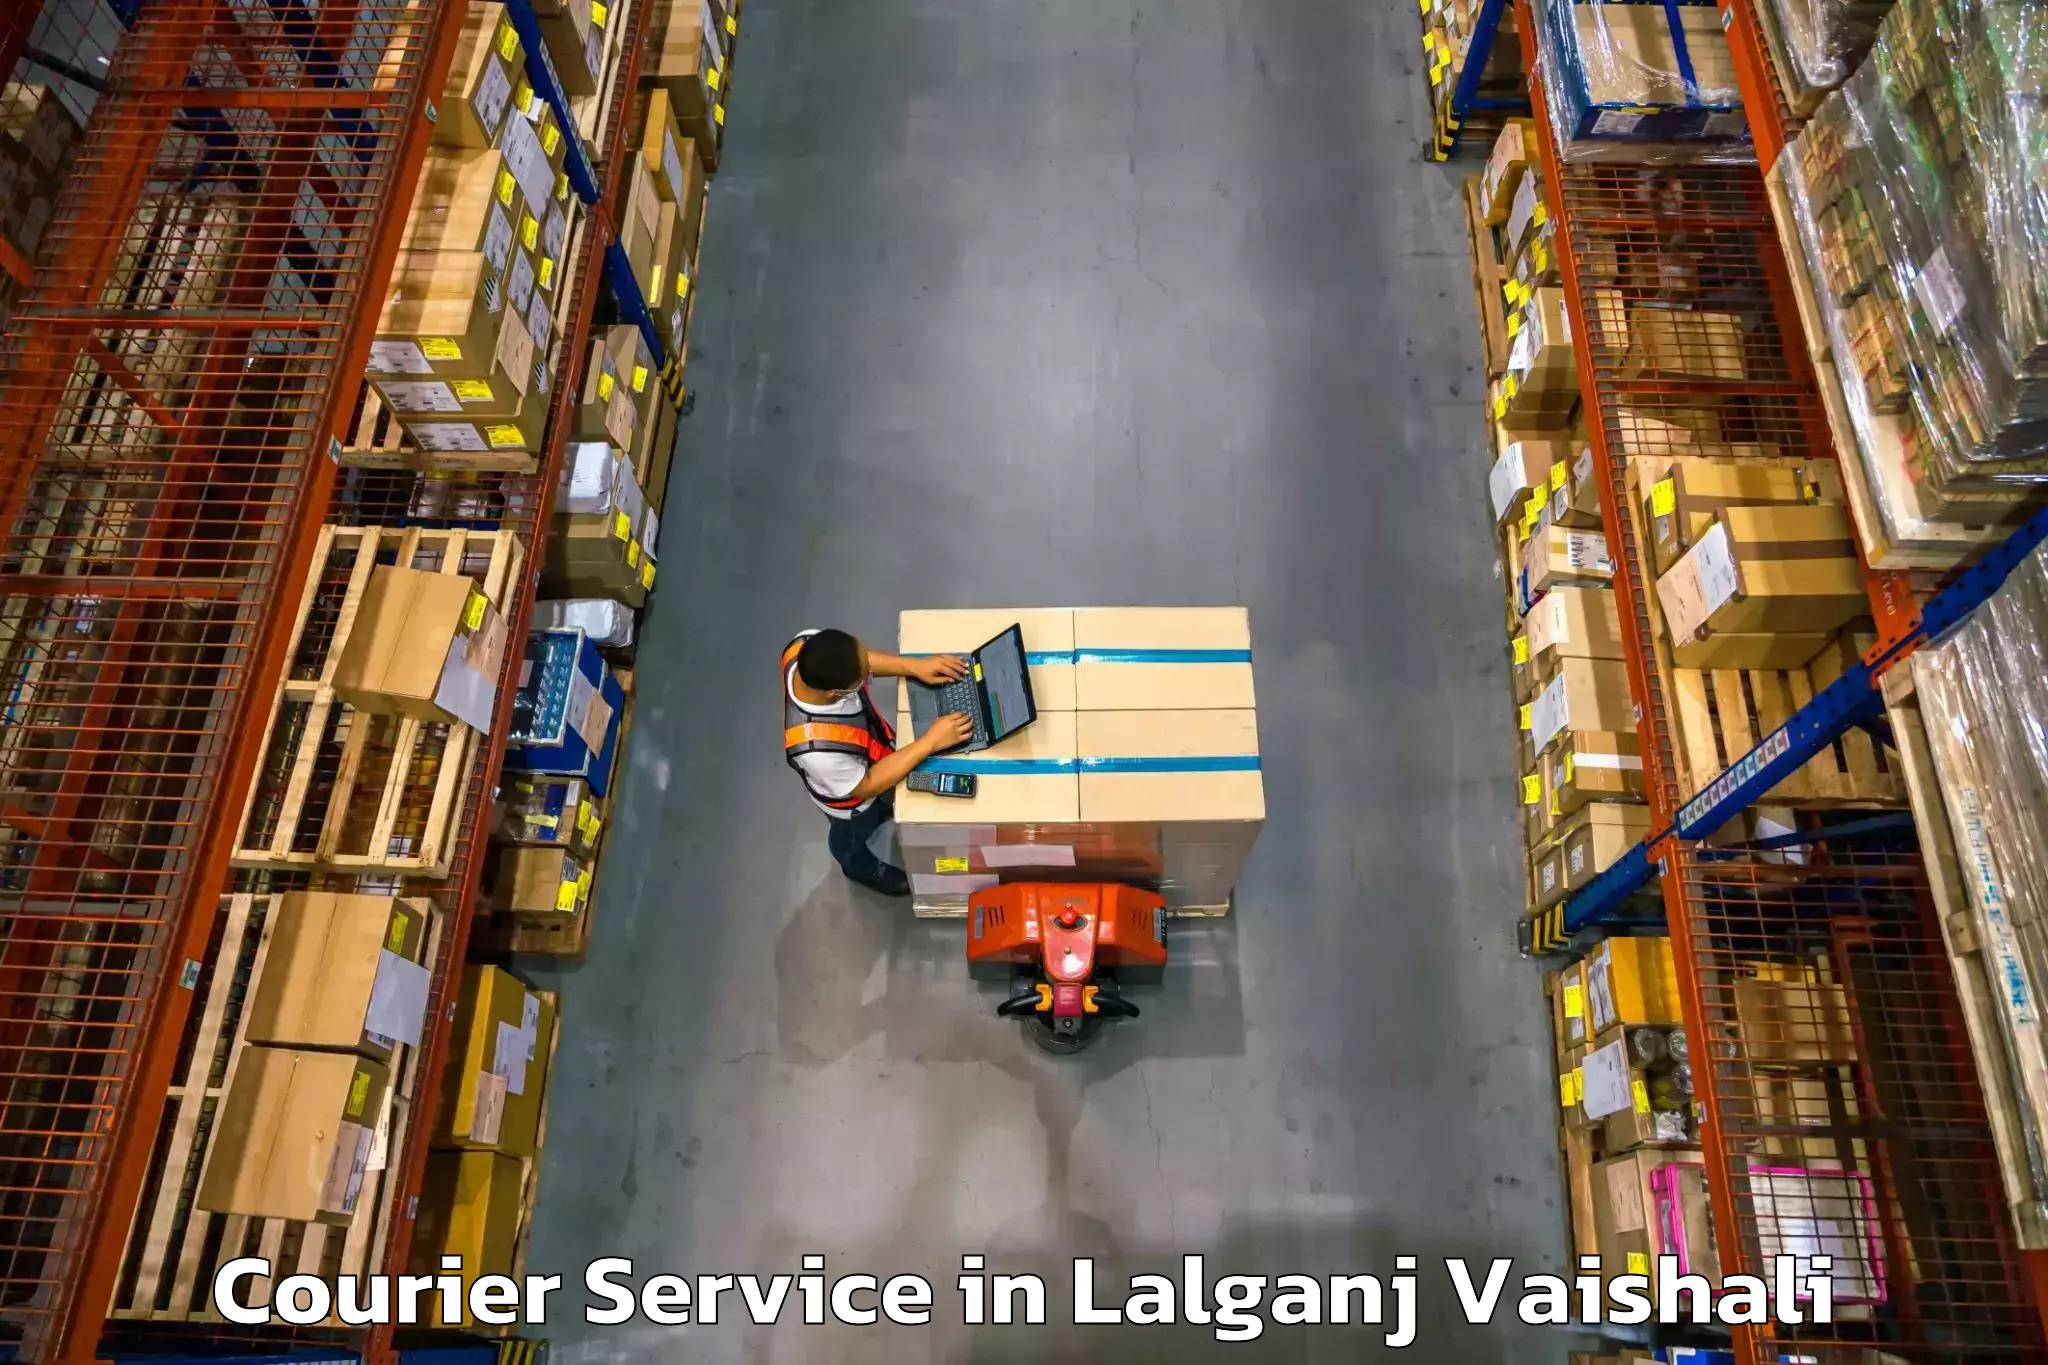 Business delivery service in Lalganj Vaishali